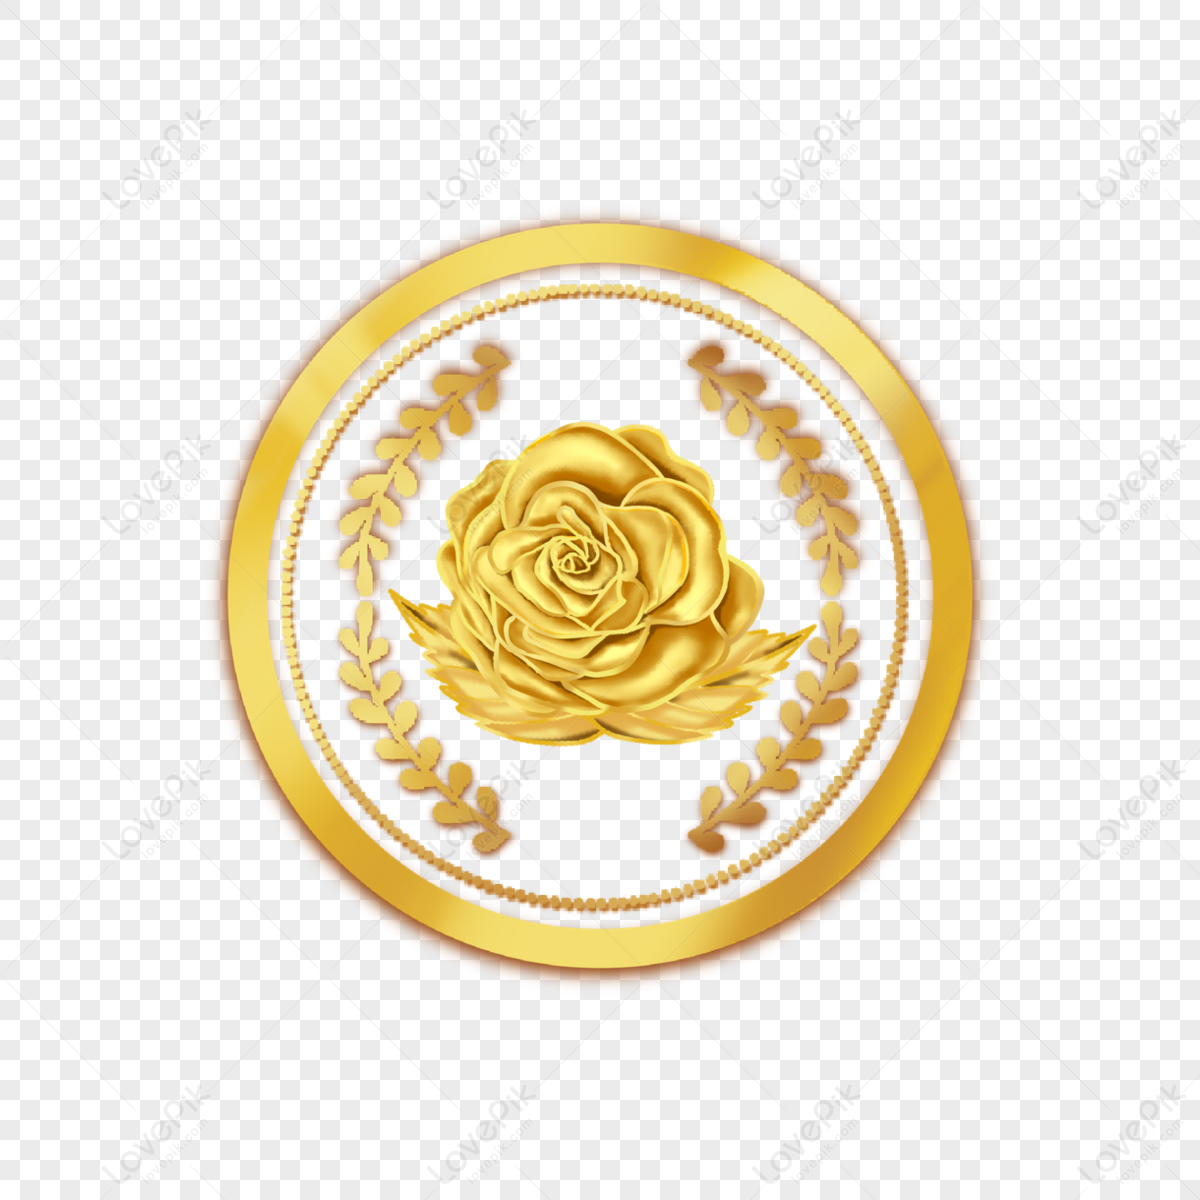 Golden flower logo design Royalty Free Vector Image